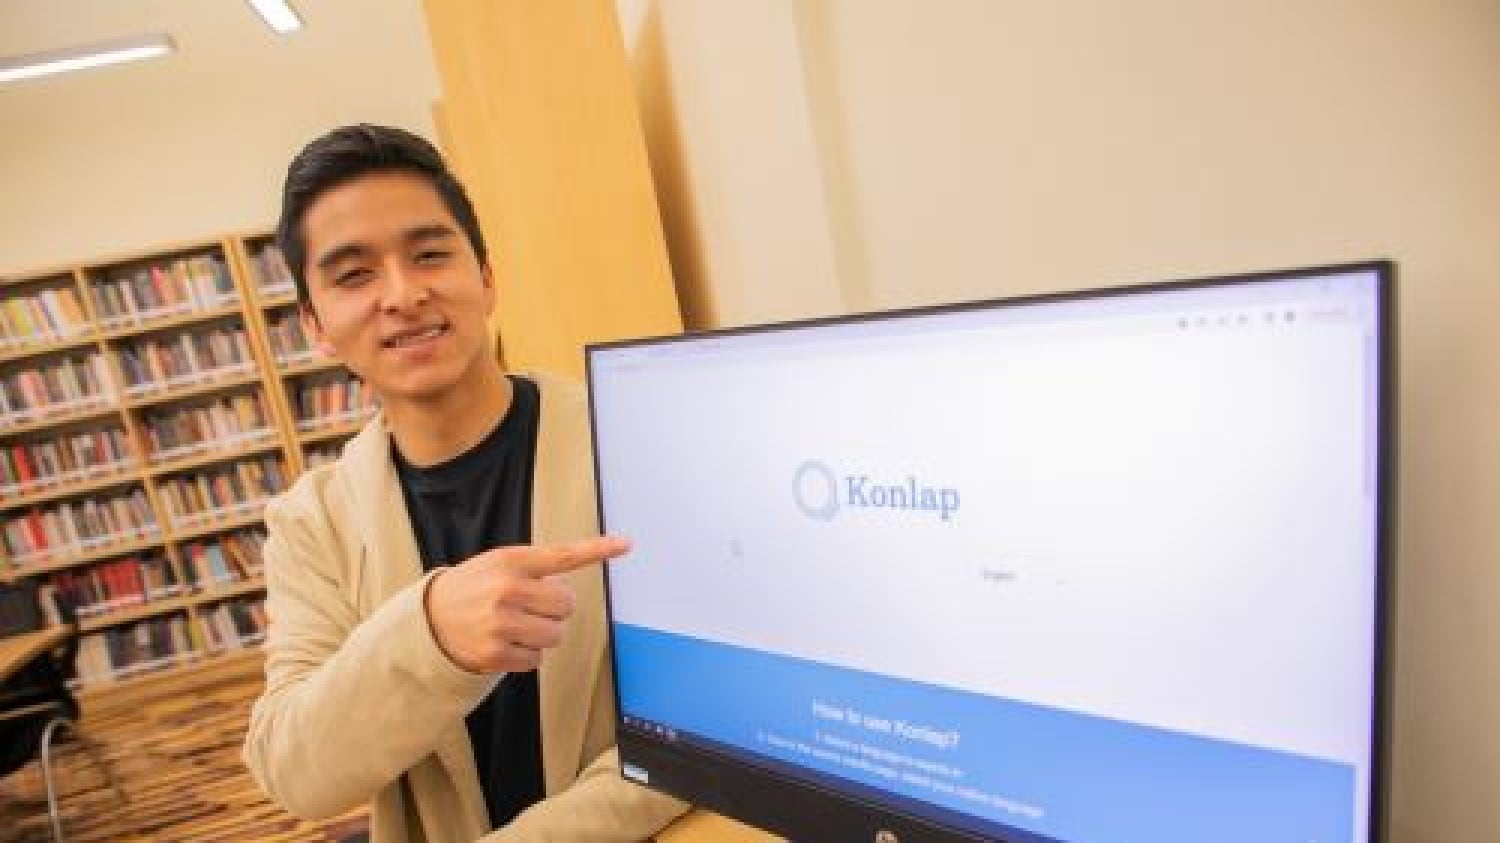 Programador peruano creador de Konlap